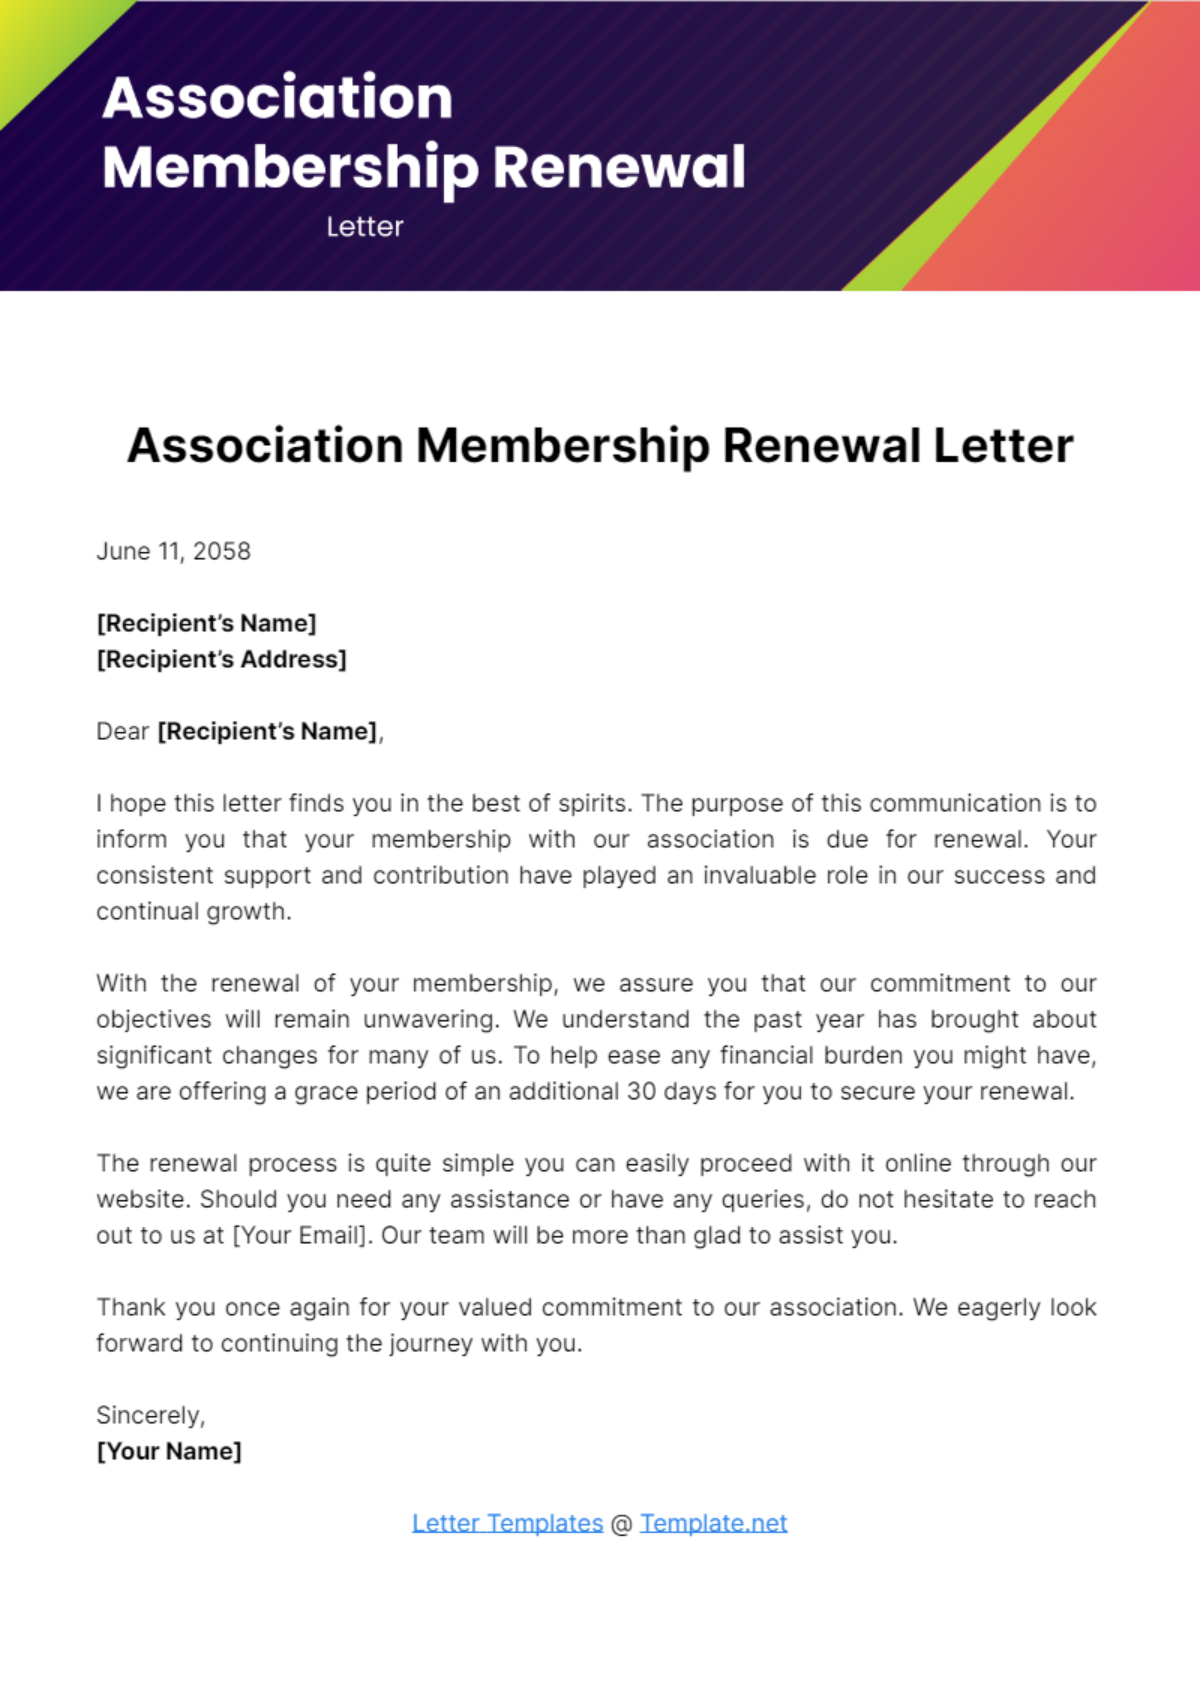 Free Association Membership Renewal Letter Template